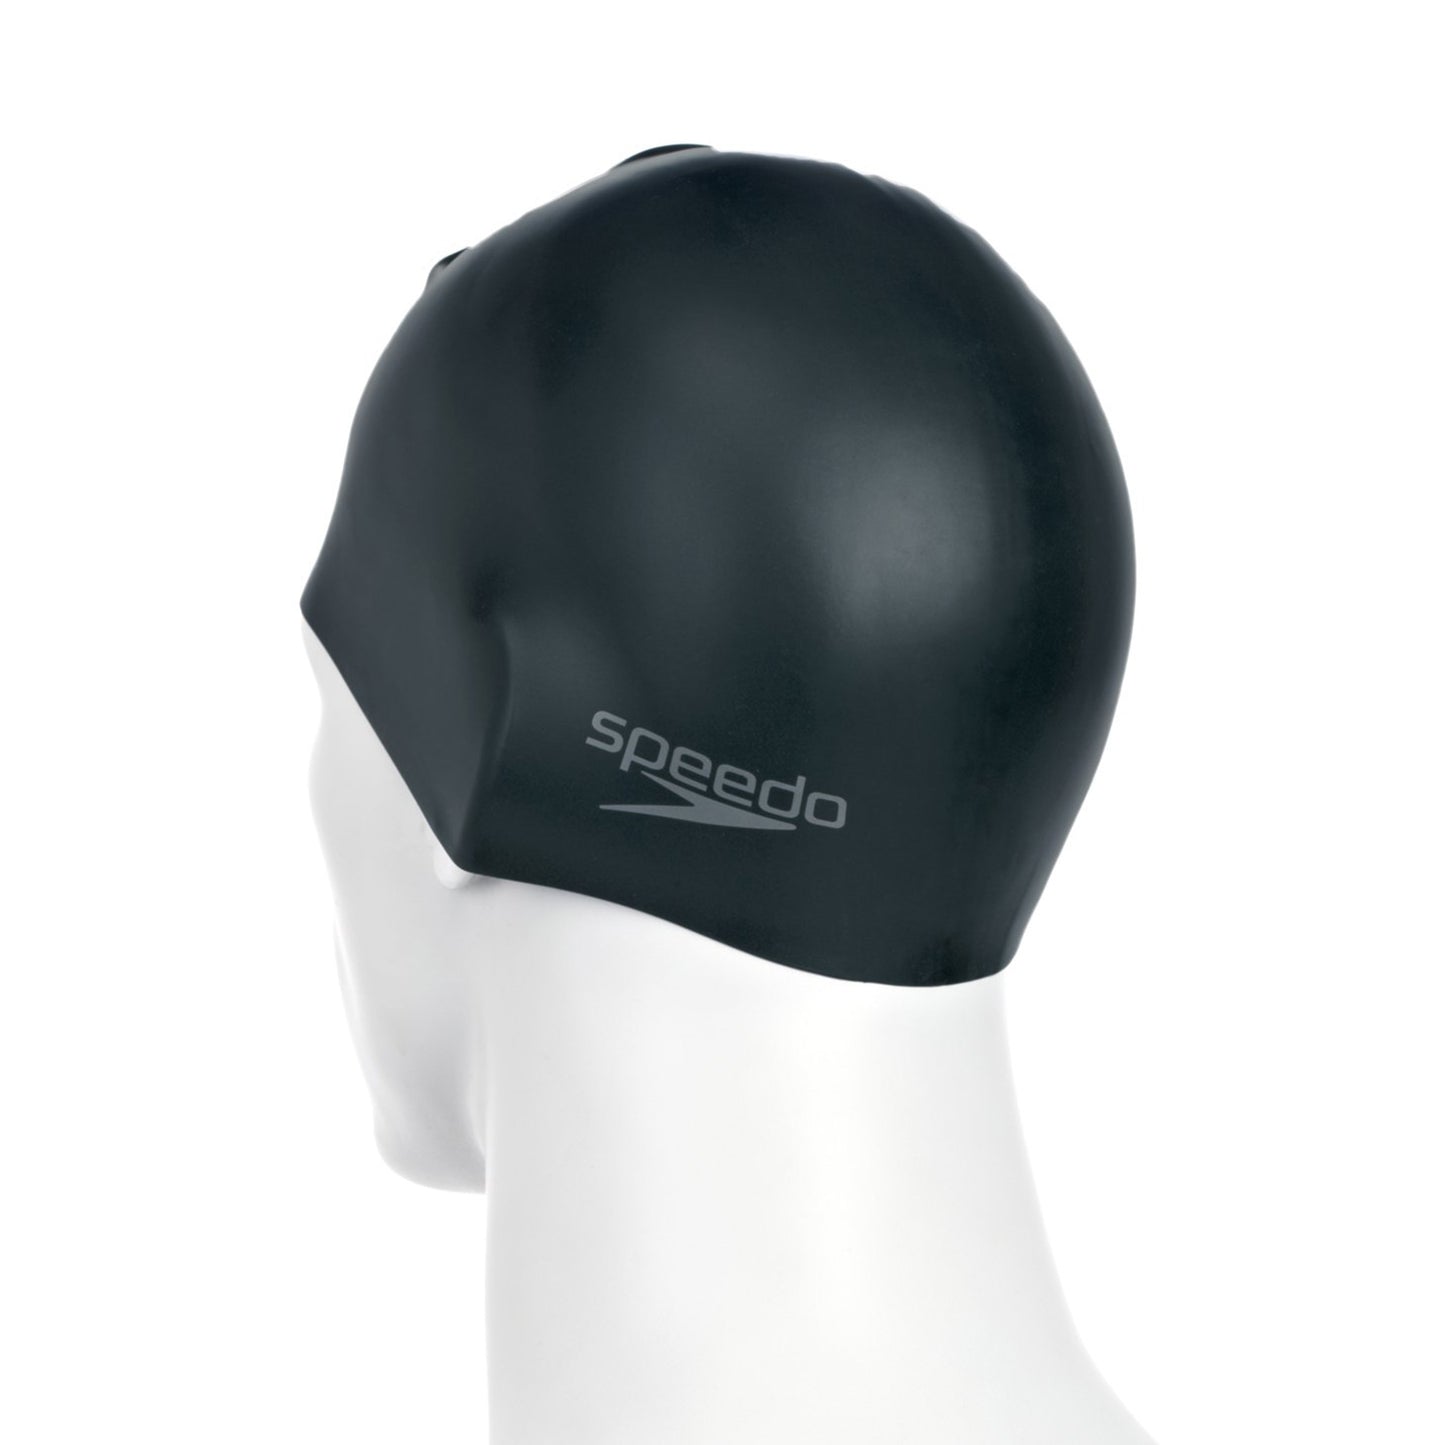 Speedo Unisex-Adult Plain Molded Silicone Swimcap - Best Price online Prokicksports.com